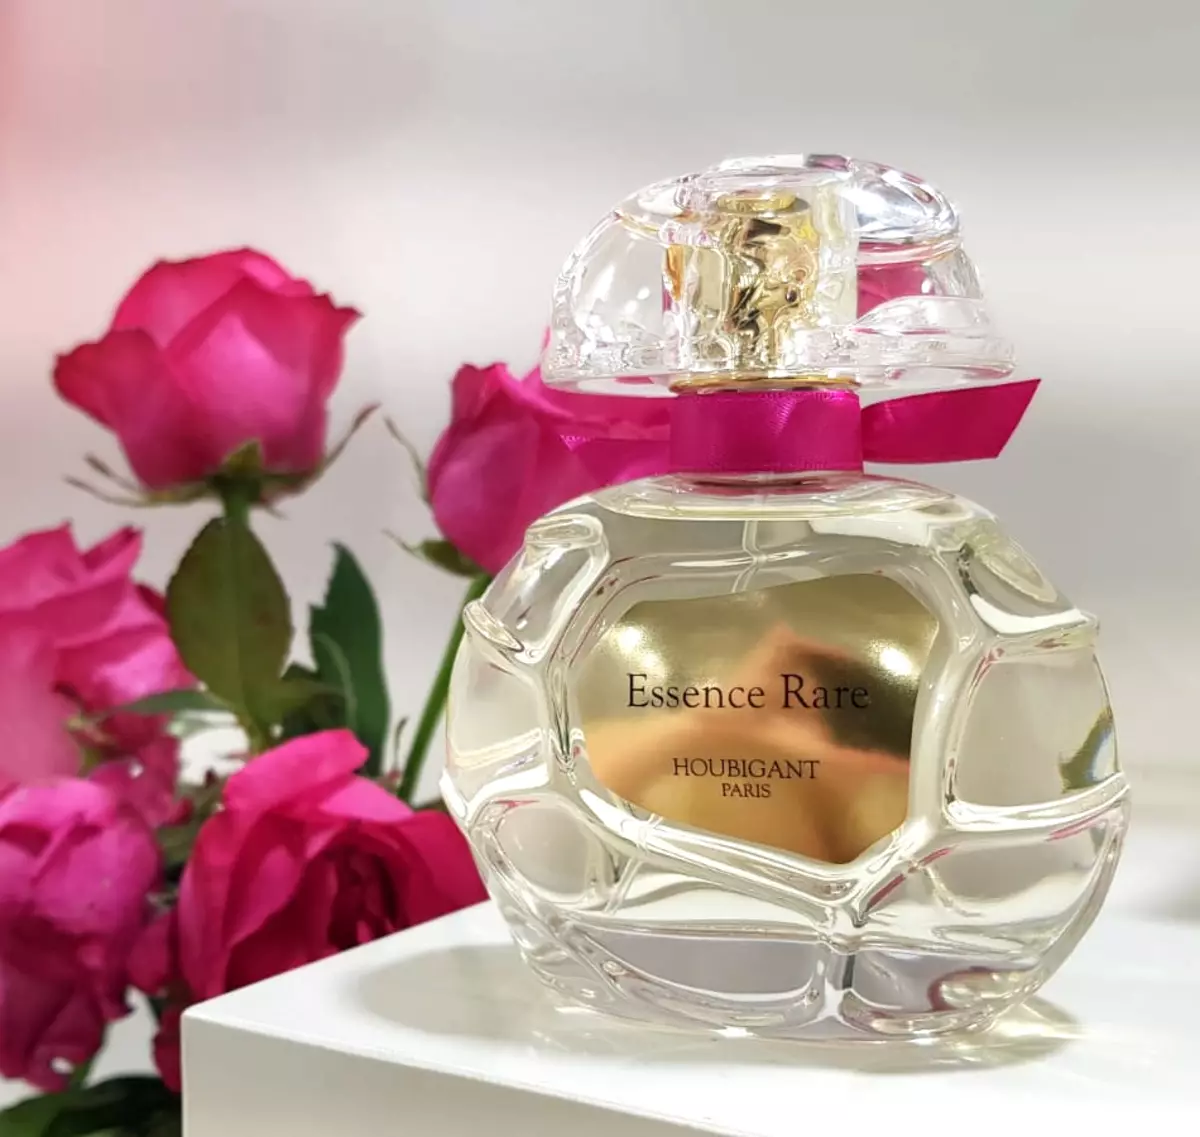 Houbigant Perfume: QueLques Fleurs Royale და არსი იშვიათი, ფორთოხალი en fleurs და Iris des Champs, Fougere Royale და Cologne ინტენსიური, Apercu და სხვა არომატები 25165_3